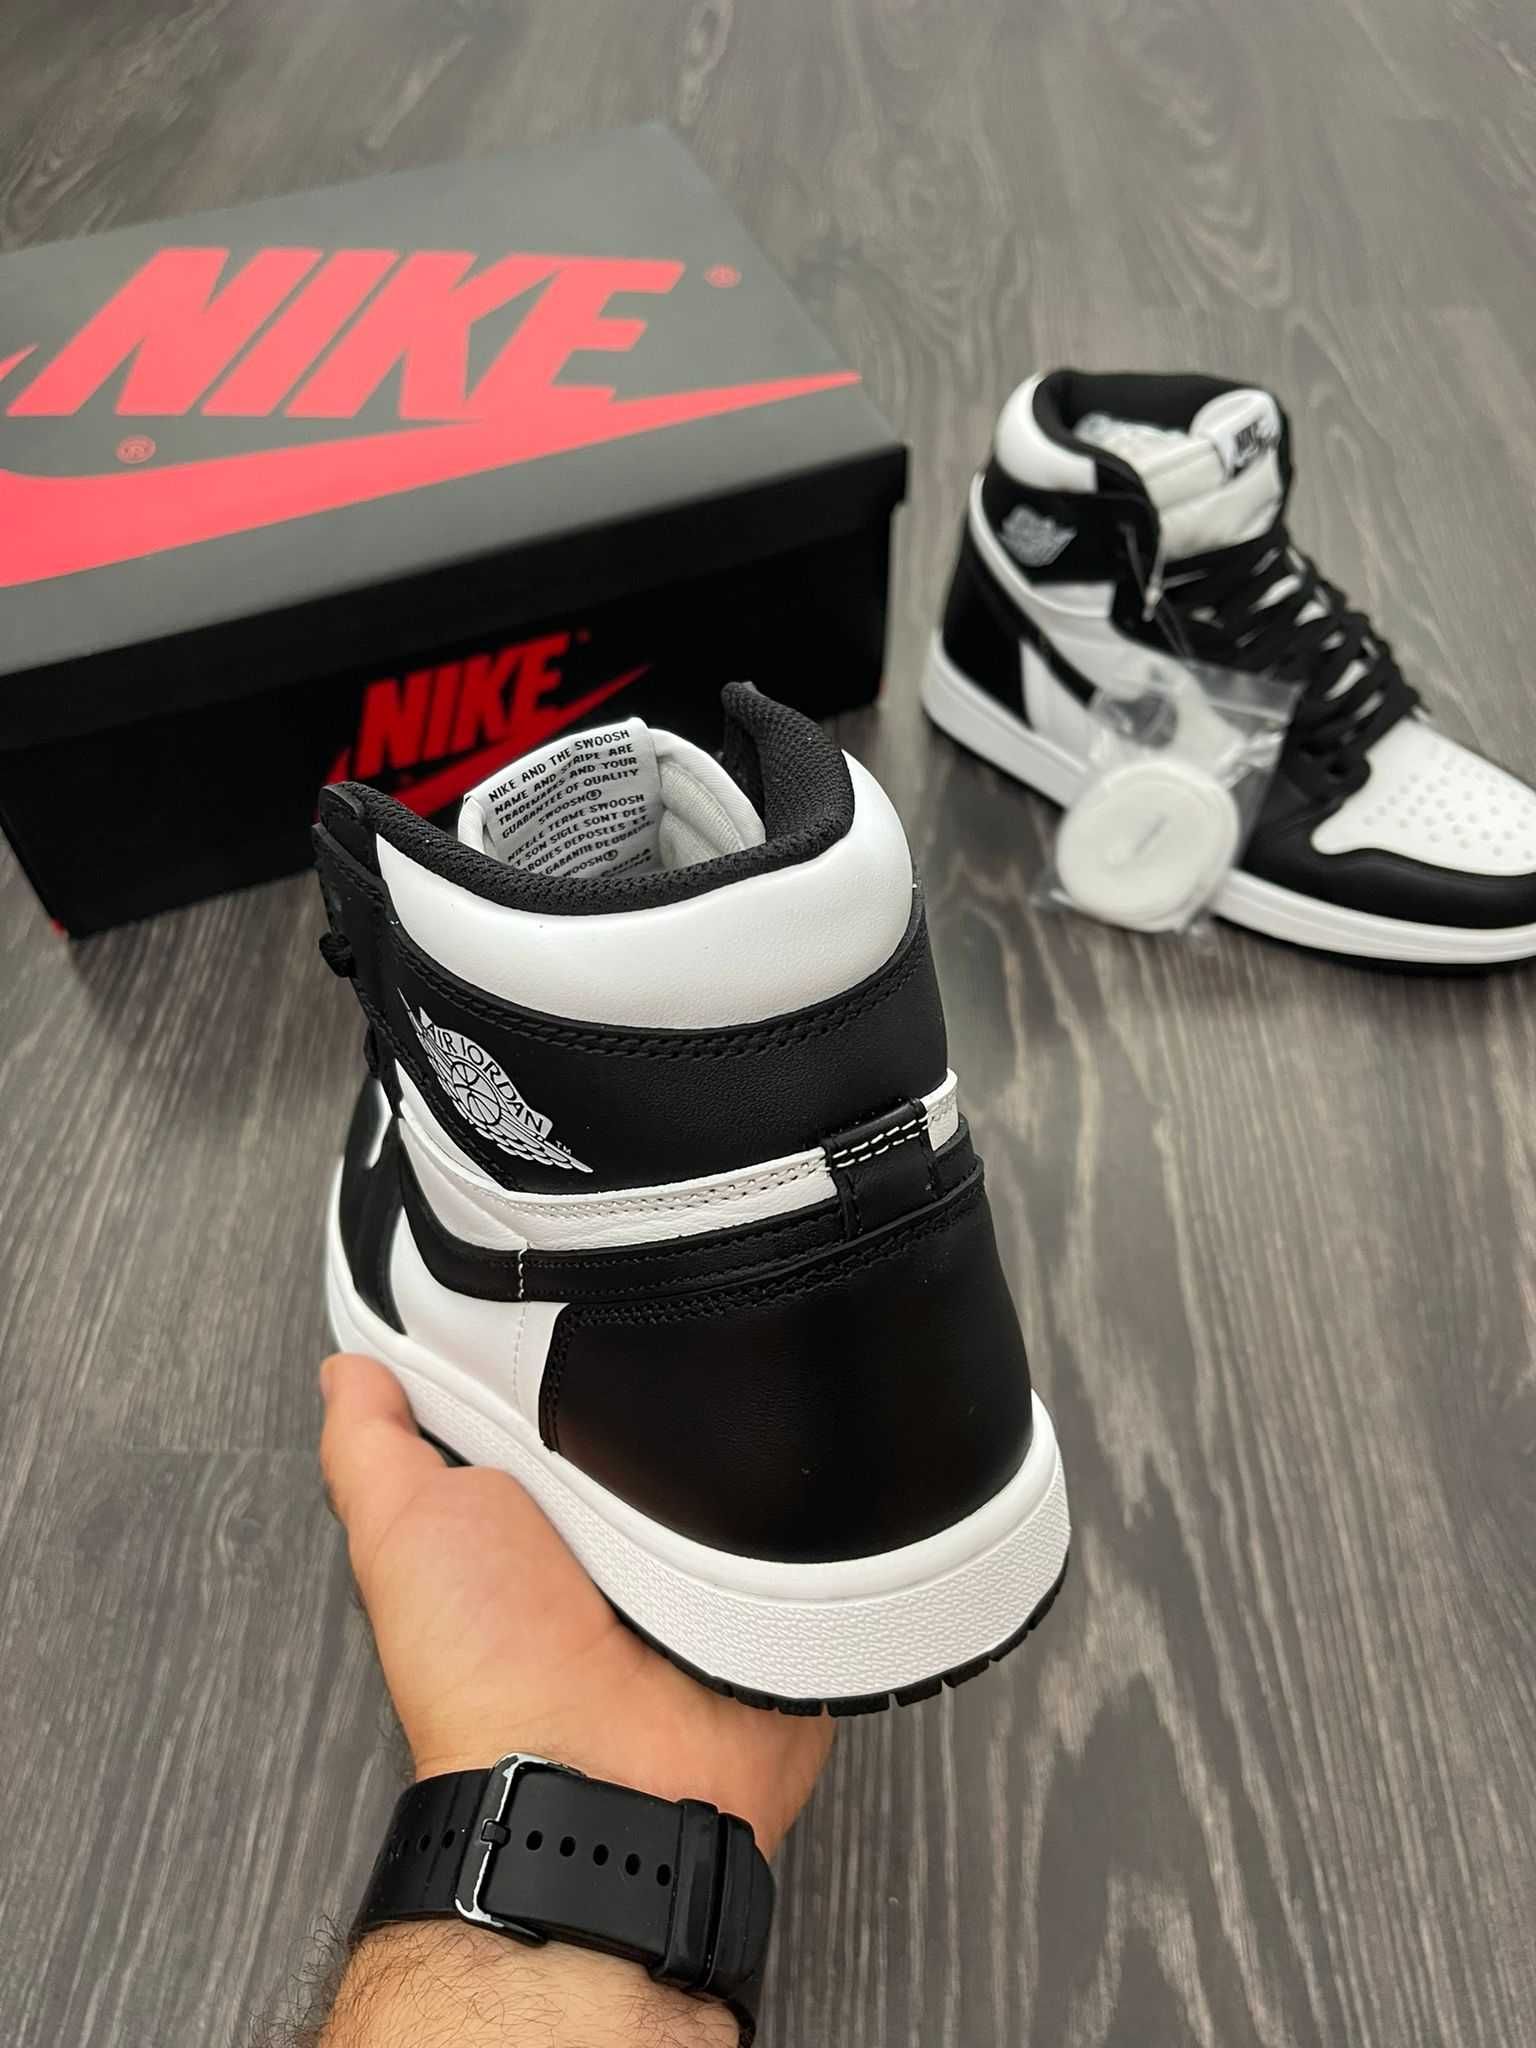 Adidasi Jordan 1 High OG Black and white | Noi cu cutie